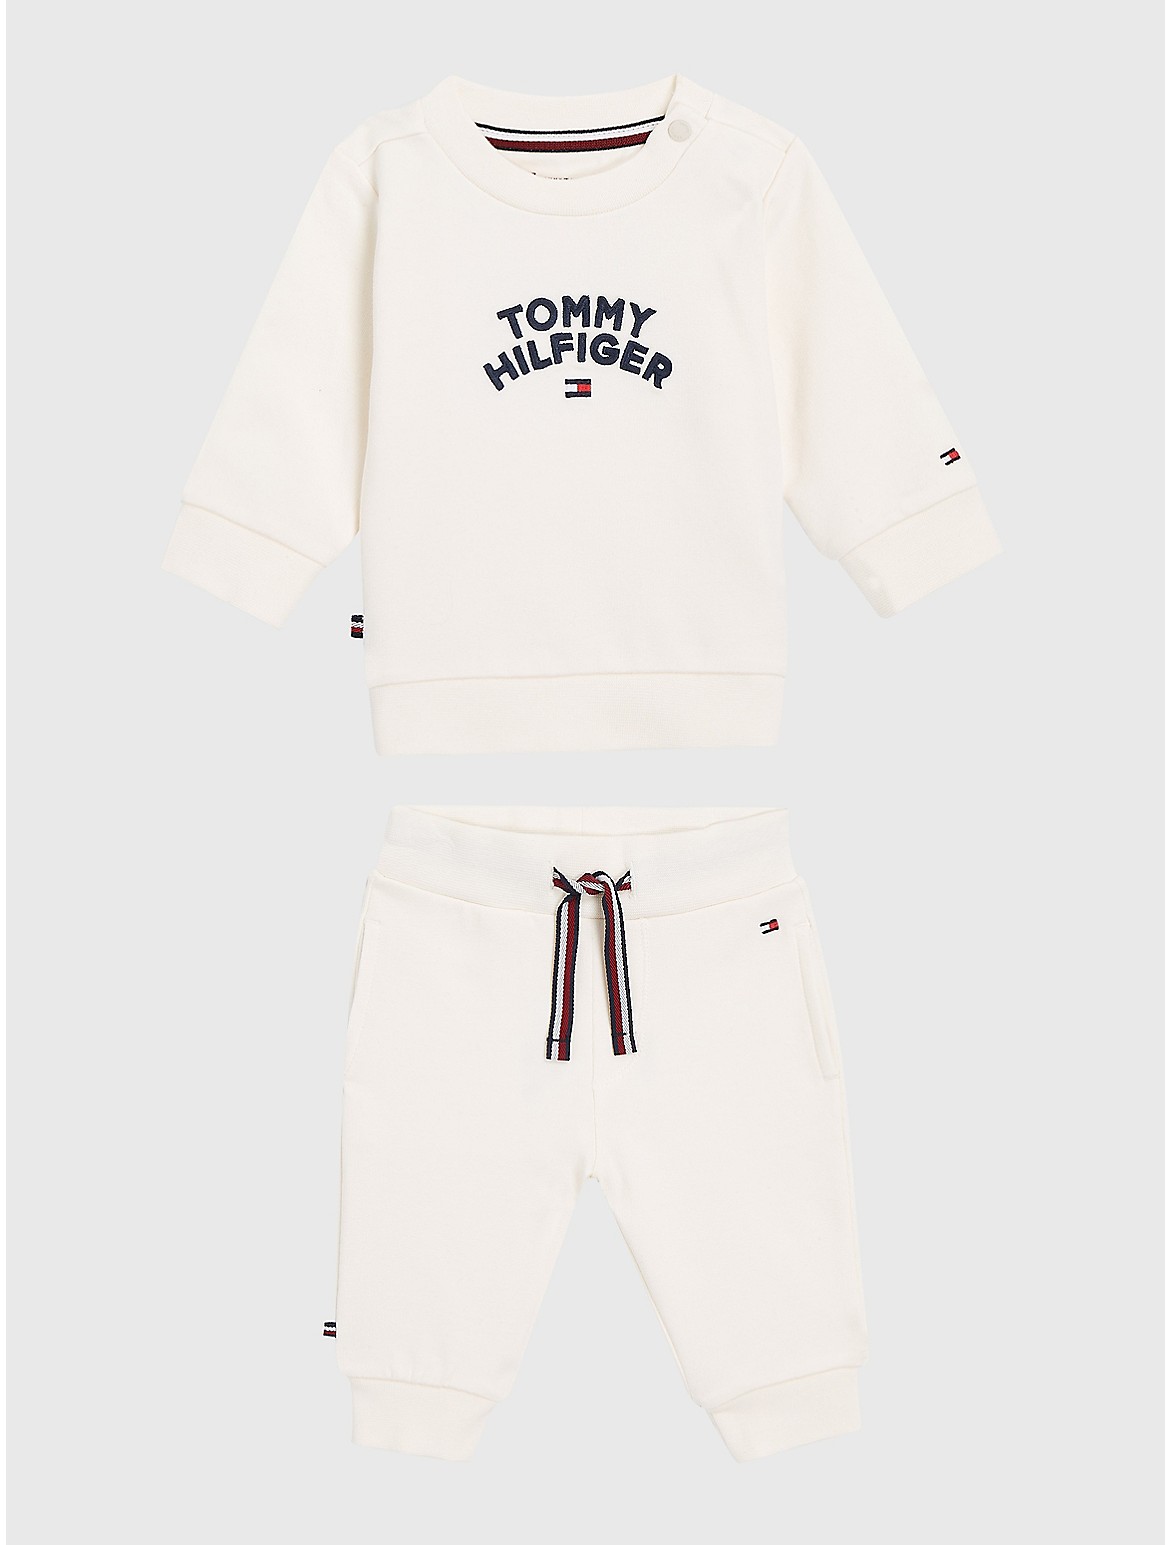 Tommy Hilfiger Babies' Tommy Flag Logo Sweat Set - White - 3-6M